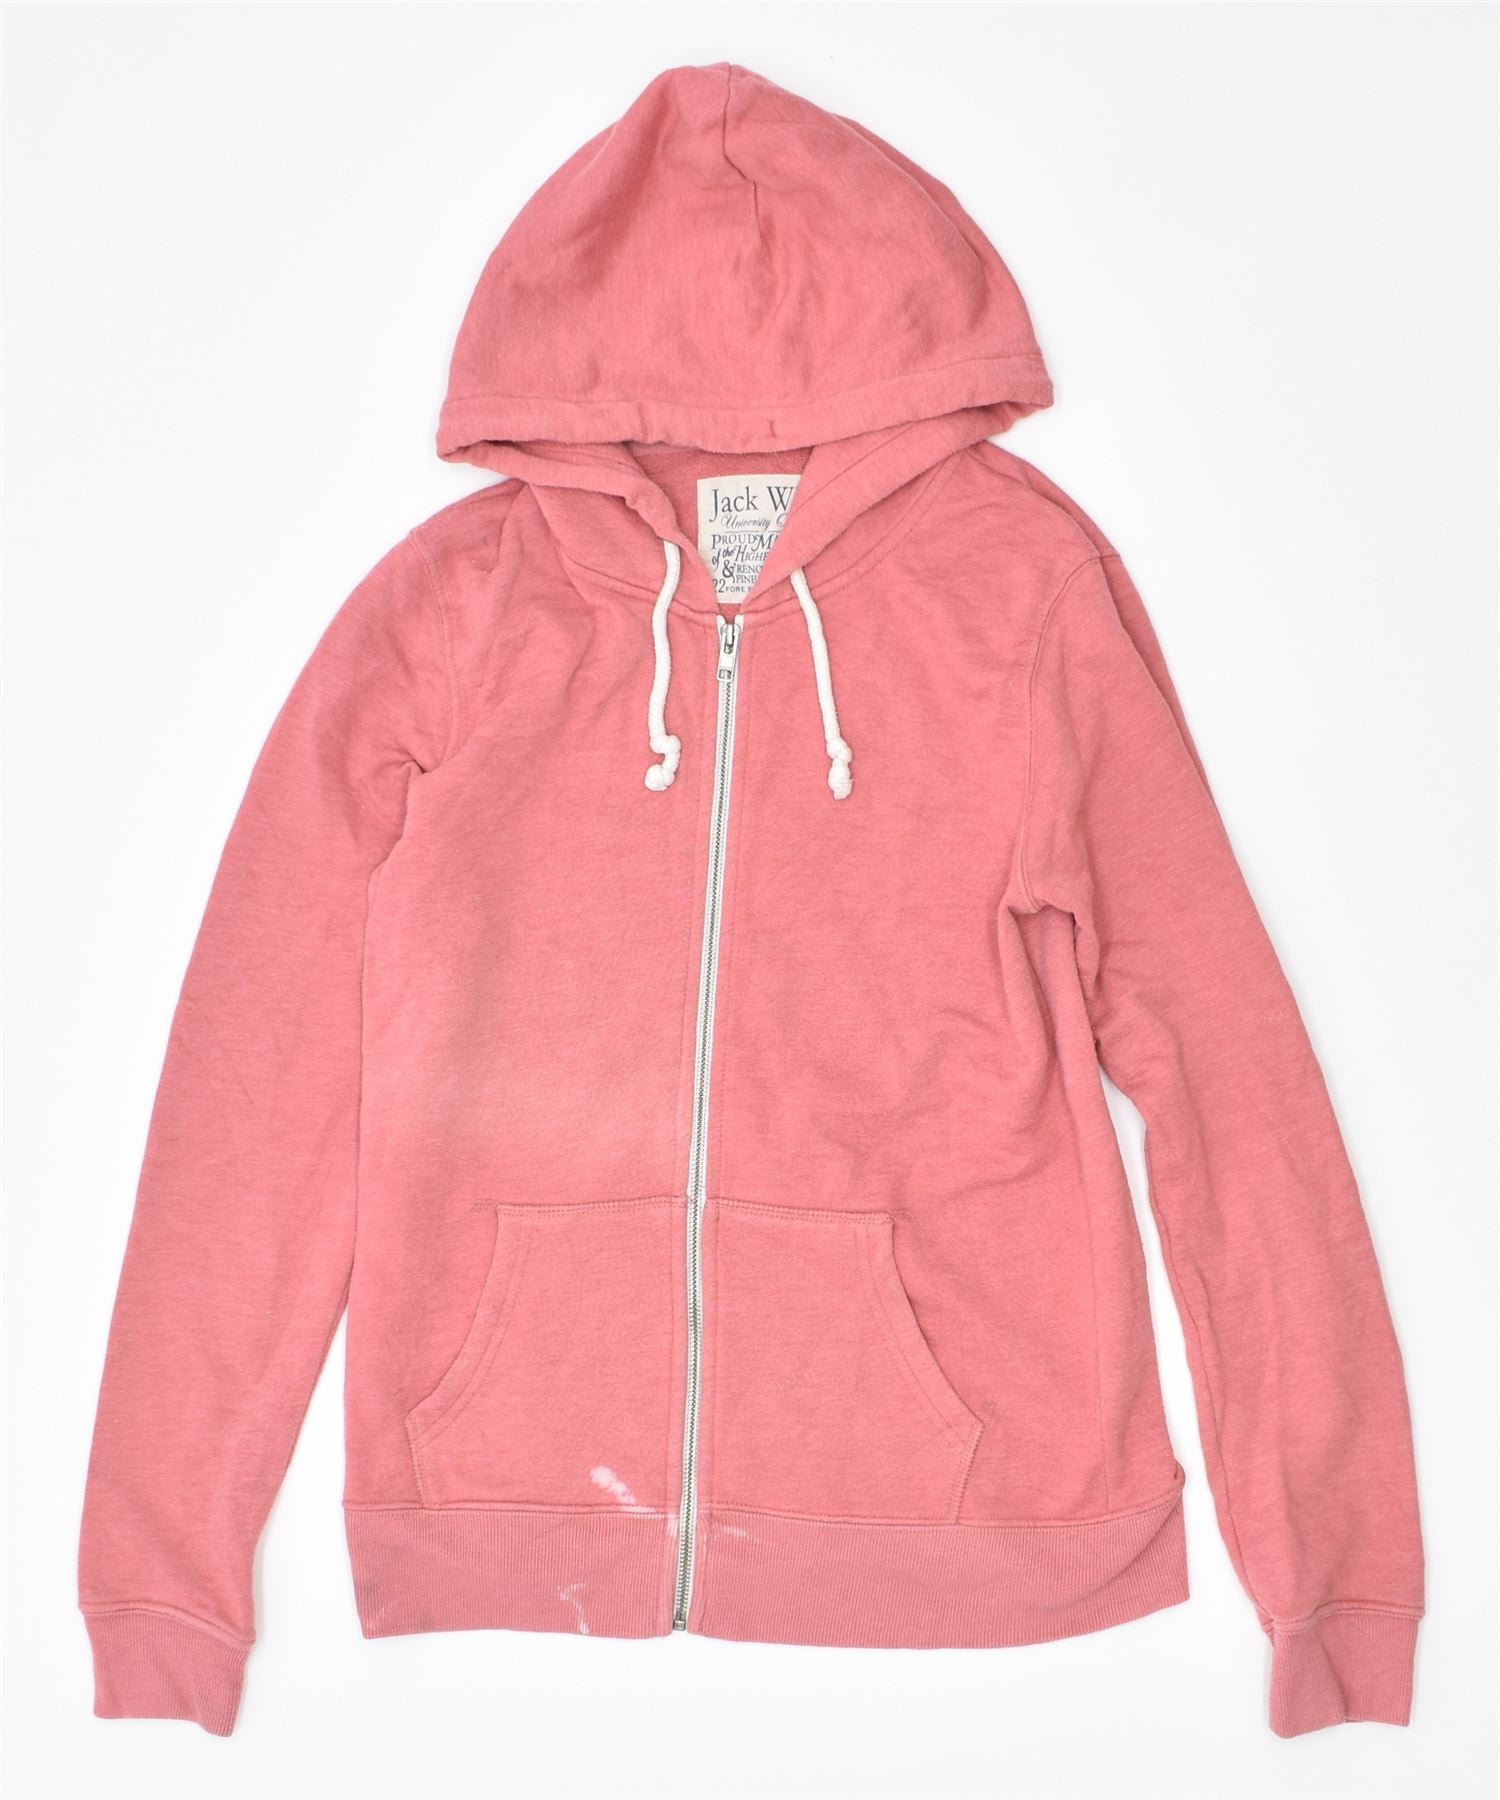 Buy Jack Wills Oversize Pink Varsity Hoodie from the Next UK